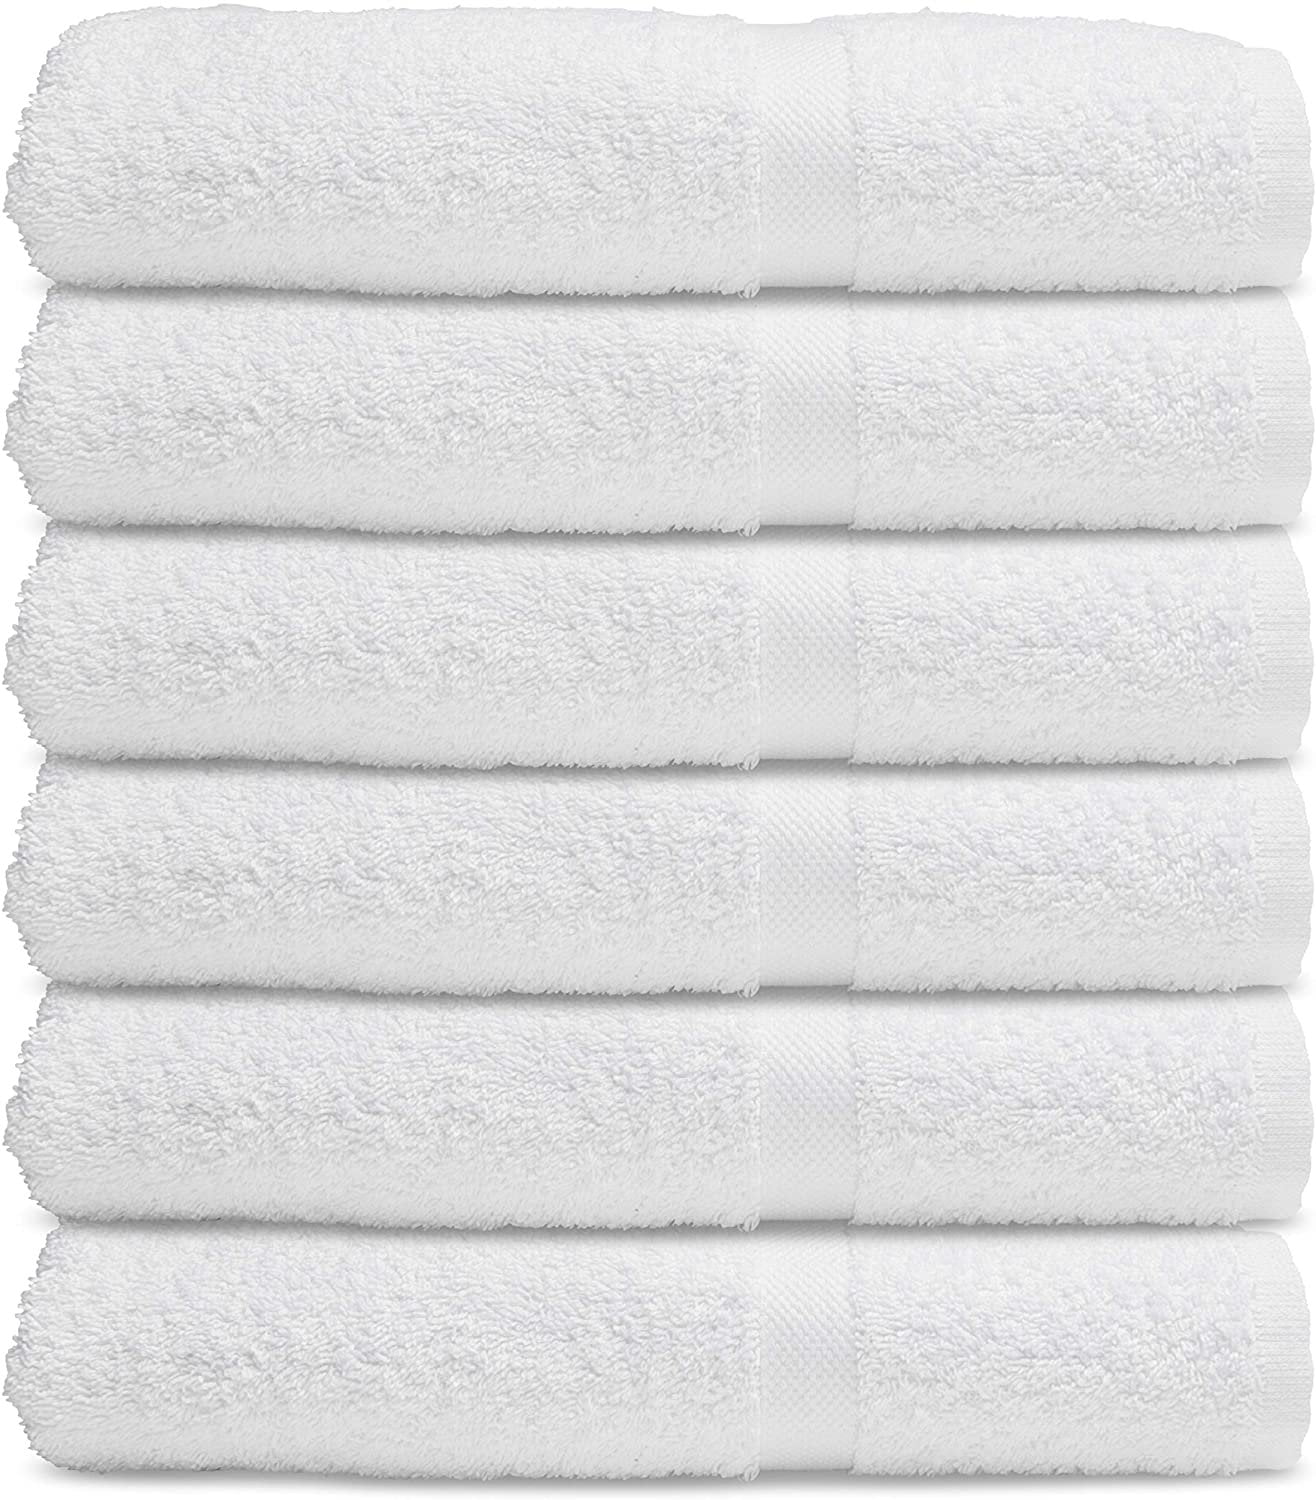 Osmykqe The Pet Pomeranian Cotton Bath Towels for Hotel-SPA-Pool-Gym-Bathroom Super Soft Absorbent Ringspun Towels